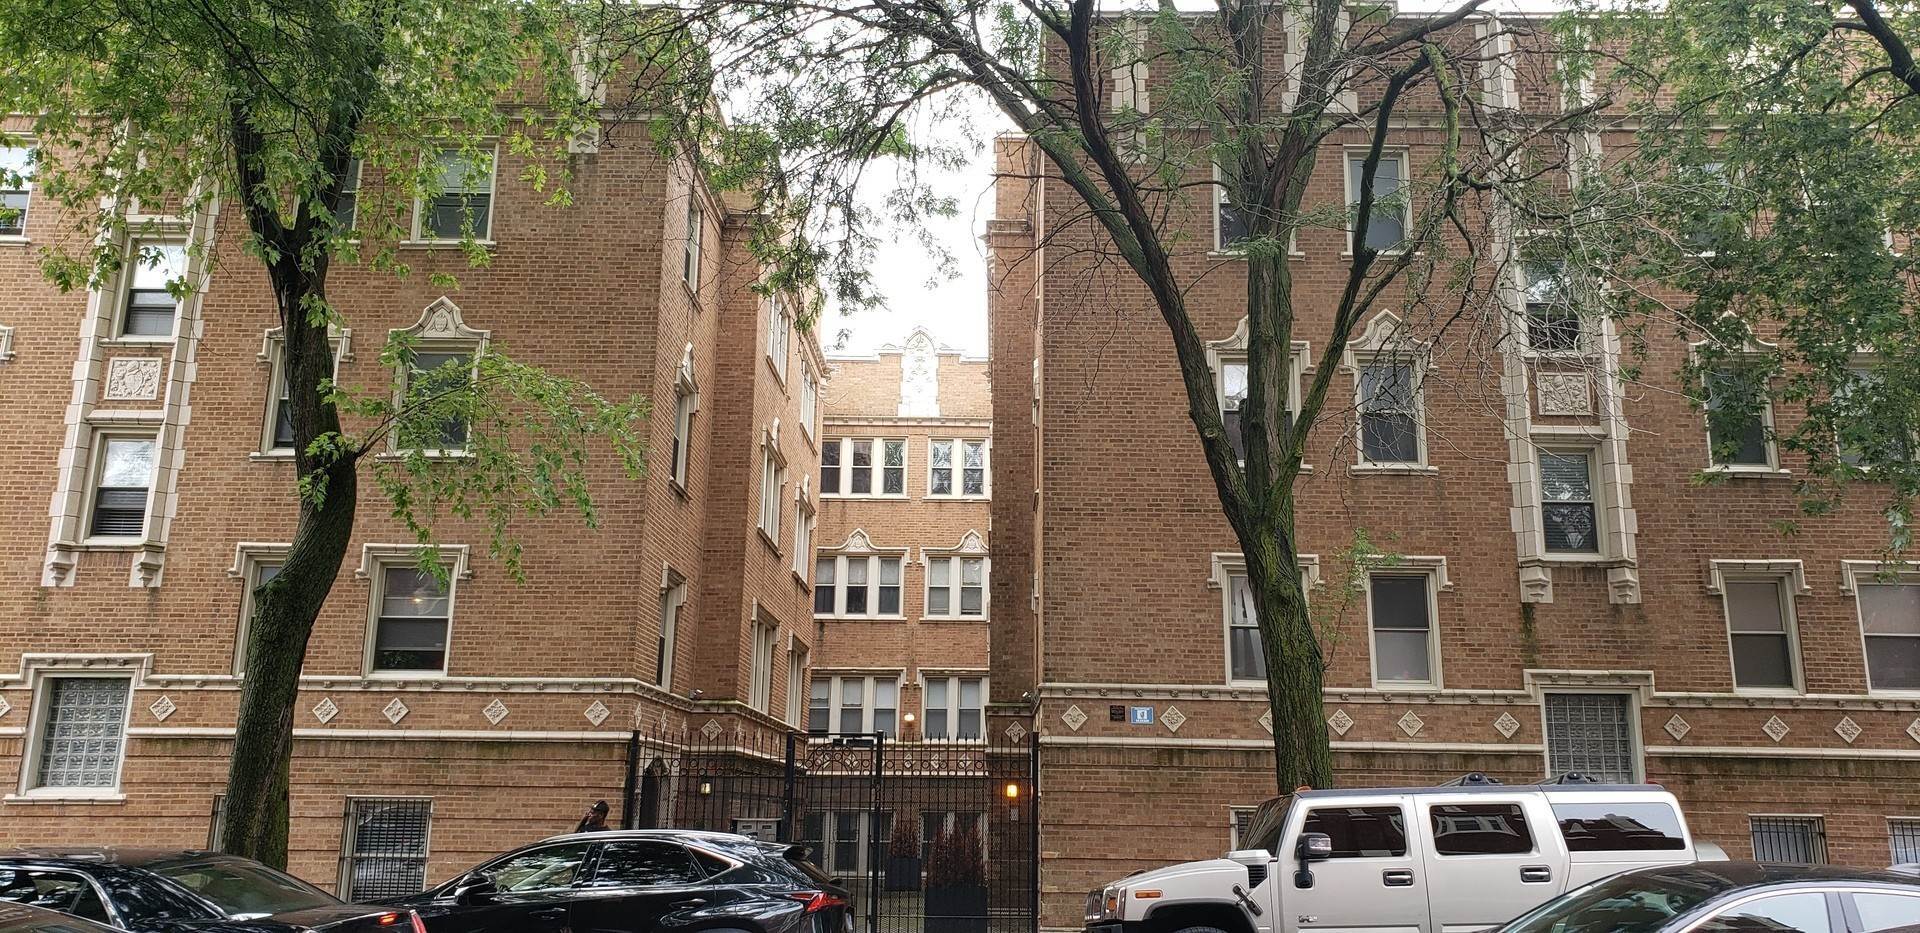 Condominium at Greater Grand Crossing, Chicago, IL 60619